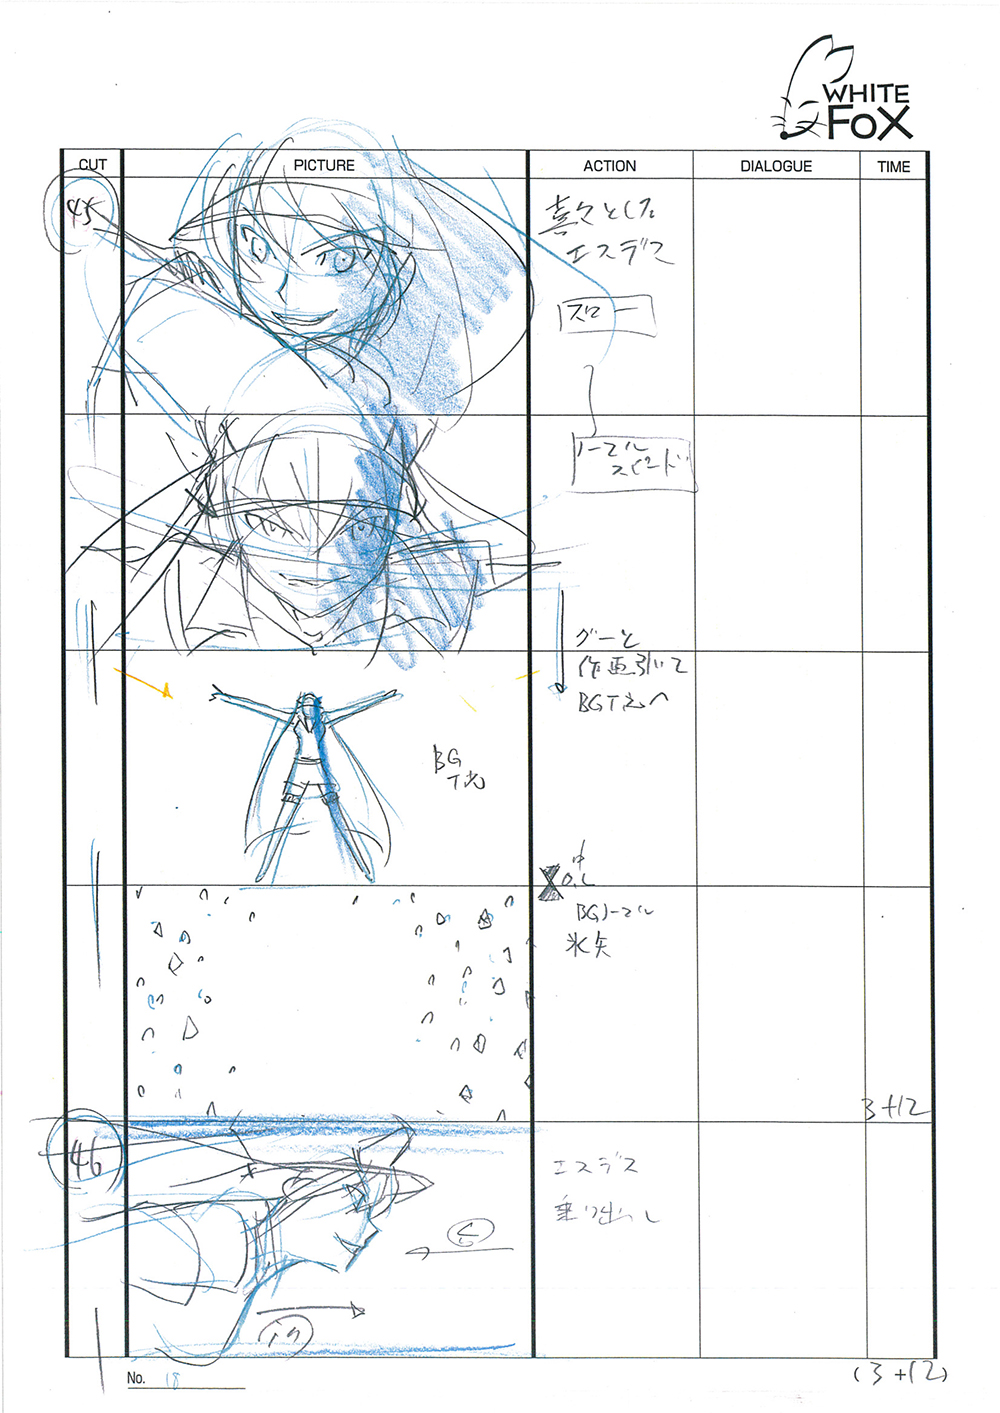 Akame ga Kill Episode 24 Storyboard Leak 020